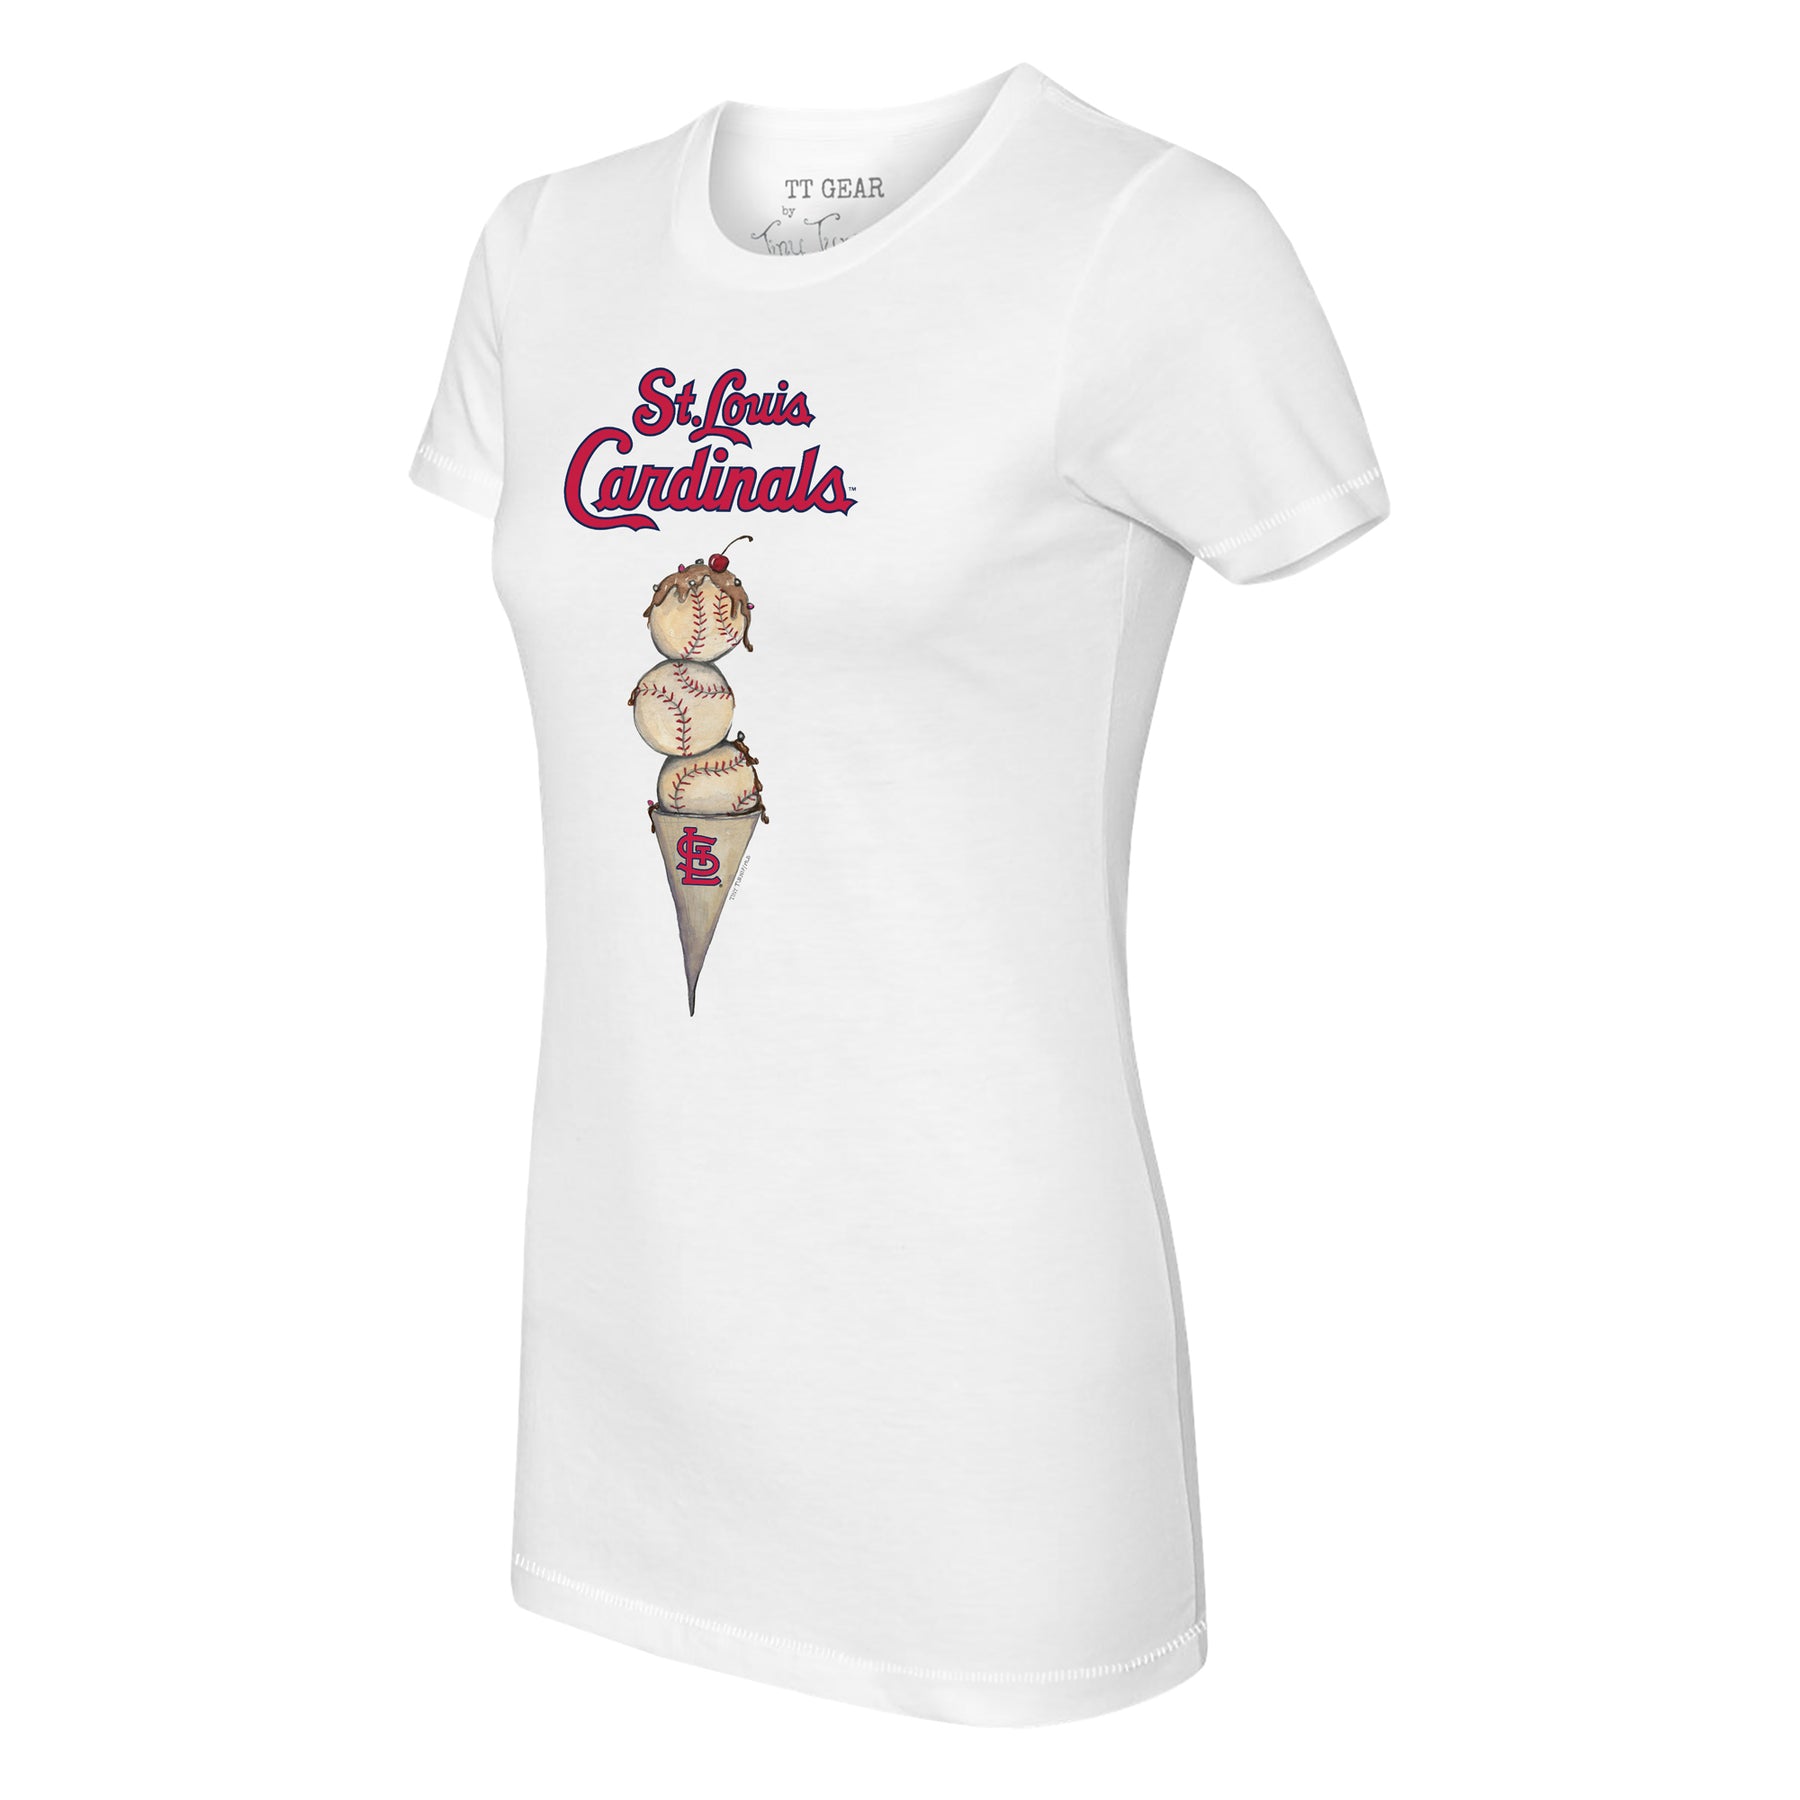 St. Louis Cardinals Triple Scoop Tee Shirt Women's 3XL / White